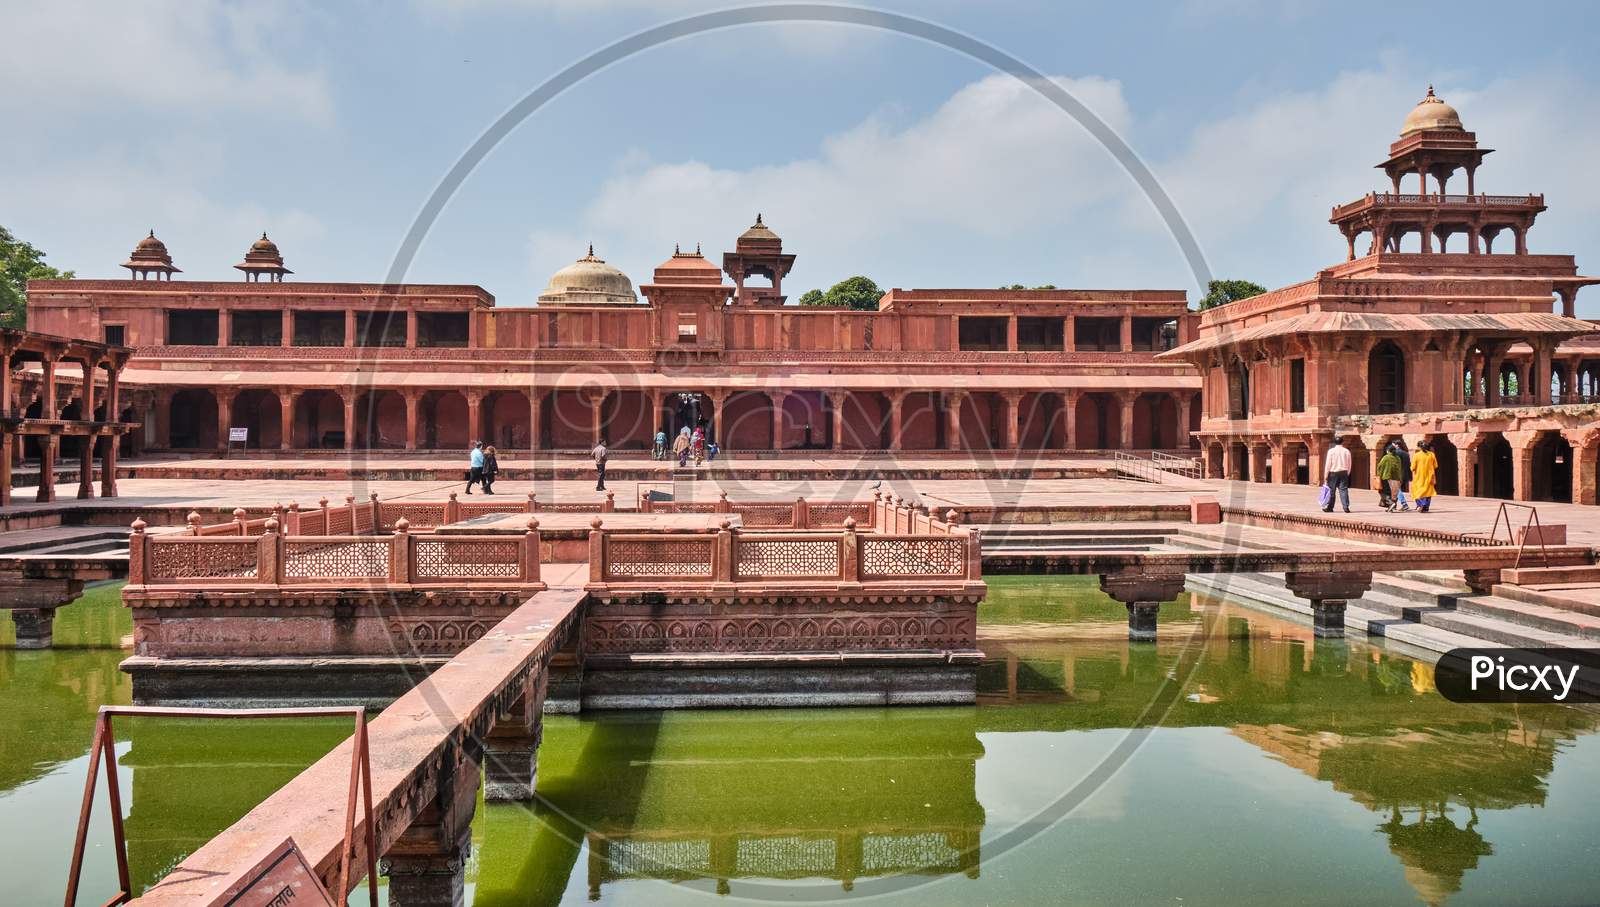 Red Fort Delhi Is A Red Sandstone Fort City Built During The Mughal Regime.